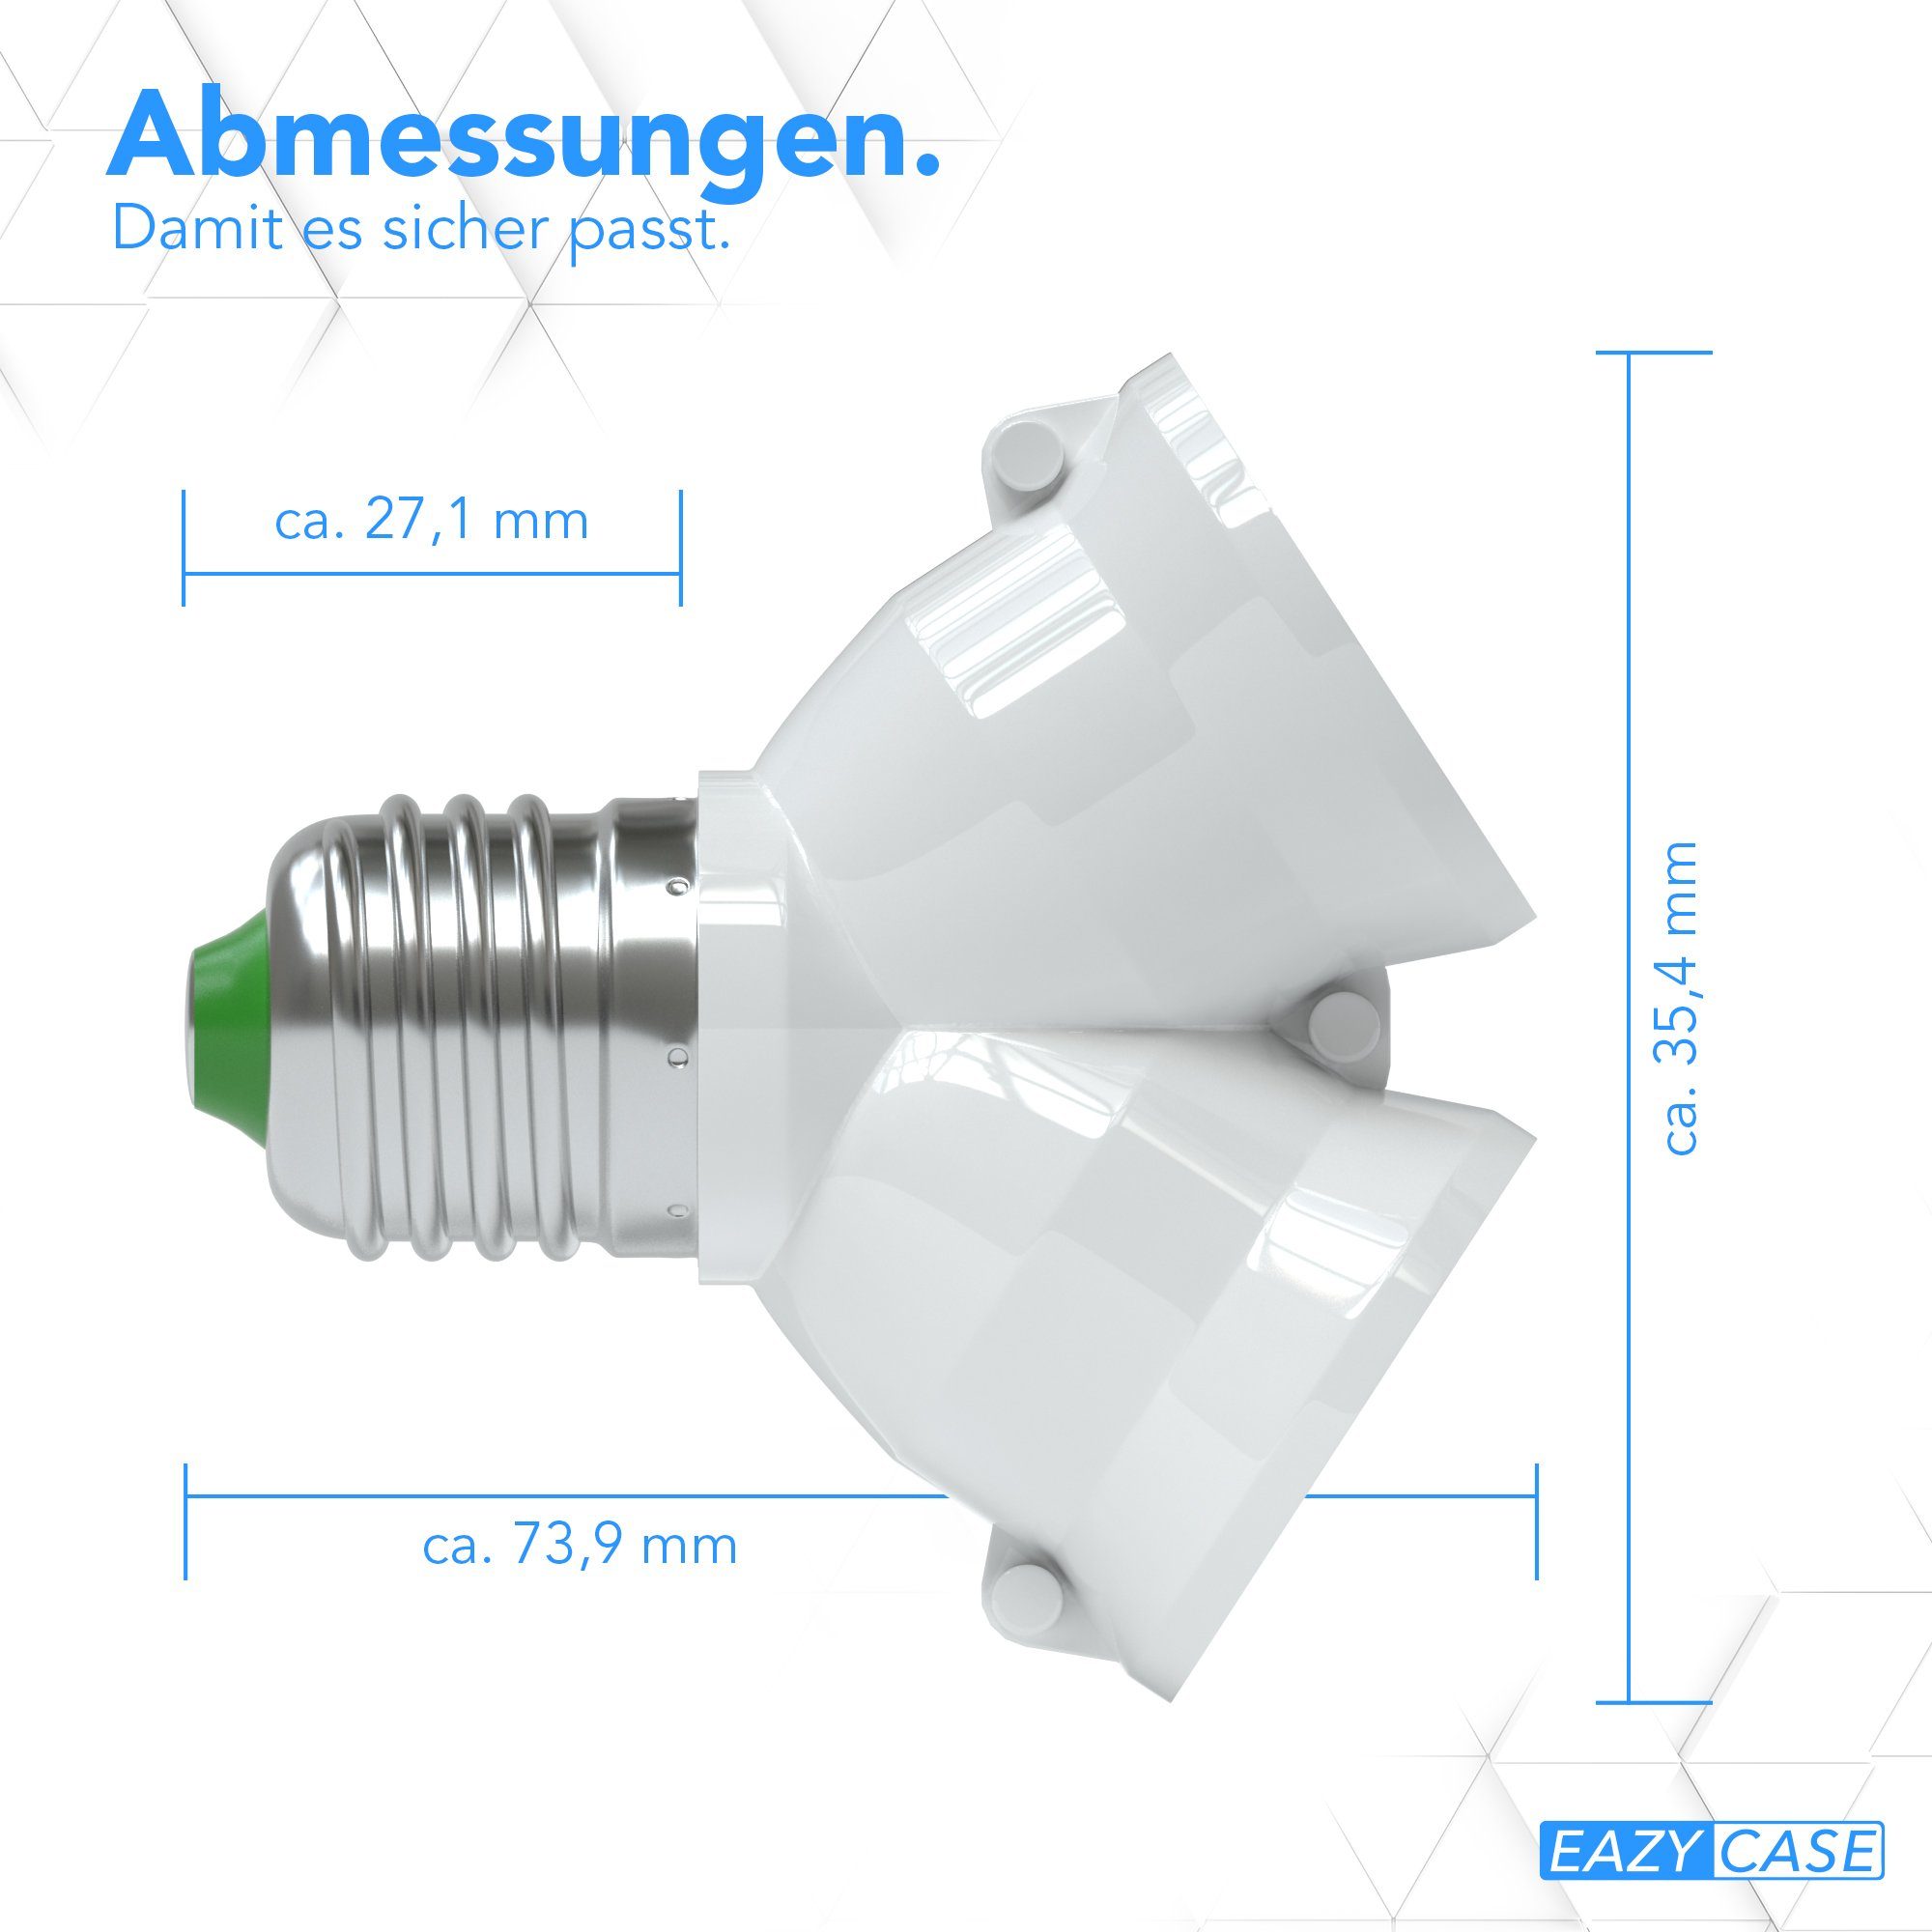 E27 Halogen 2x auf Fassung E27 Lampe EAZY Glühbirne LED 4-St), Konve, Adapter Lampenfassung Lampensockel Sets 2x E27 CASE (Spar-Set, zu E27 Energiesparlampe Adapter Lampe Lampenadapter